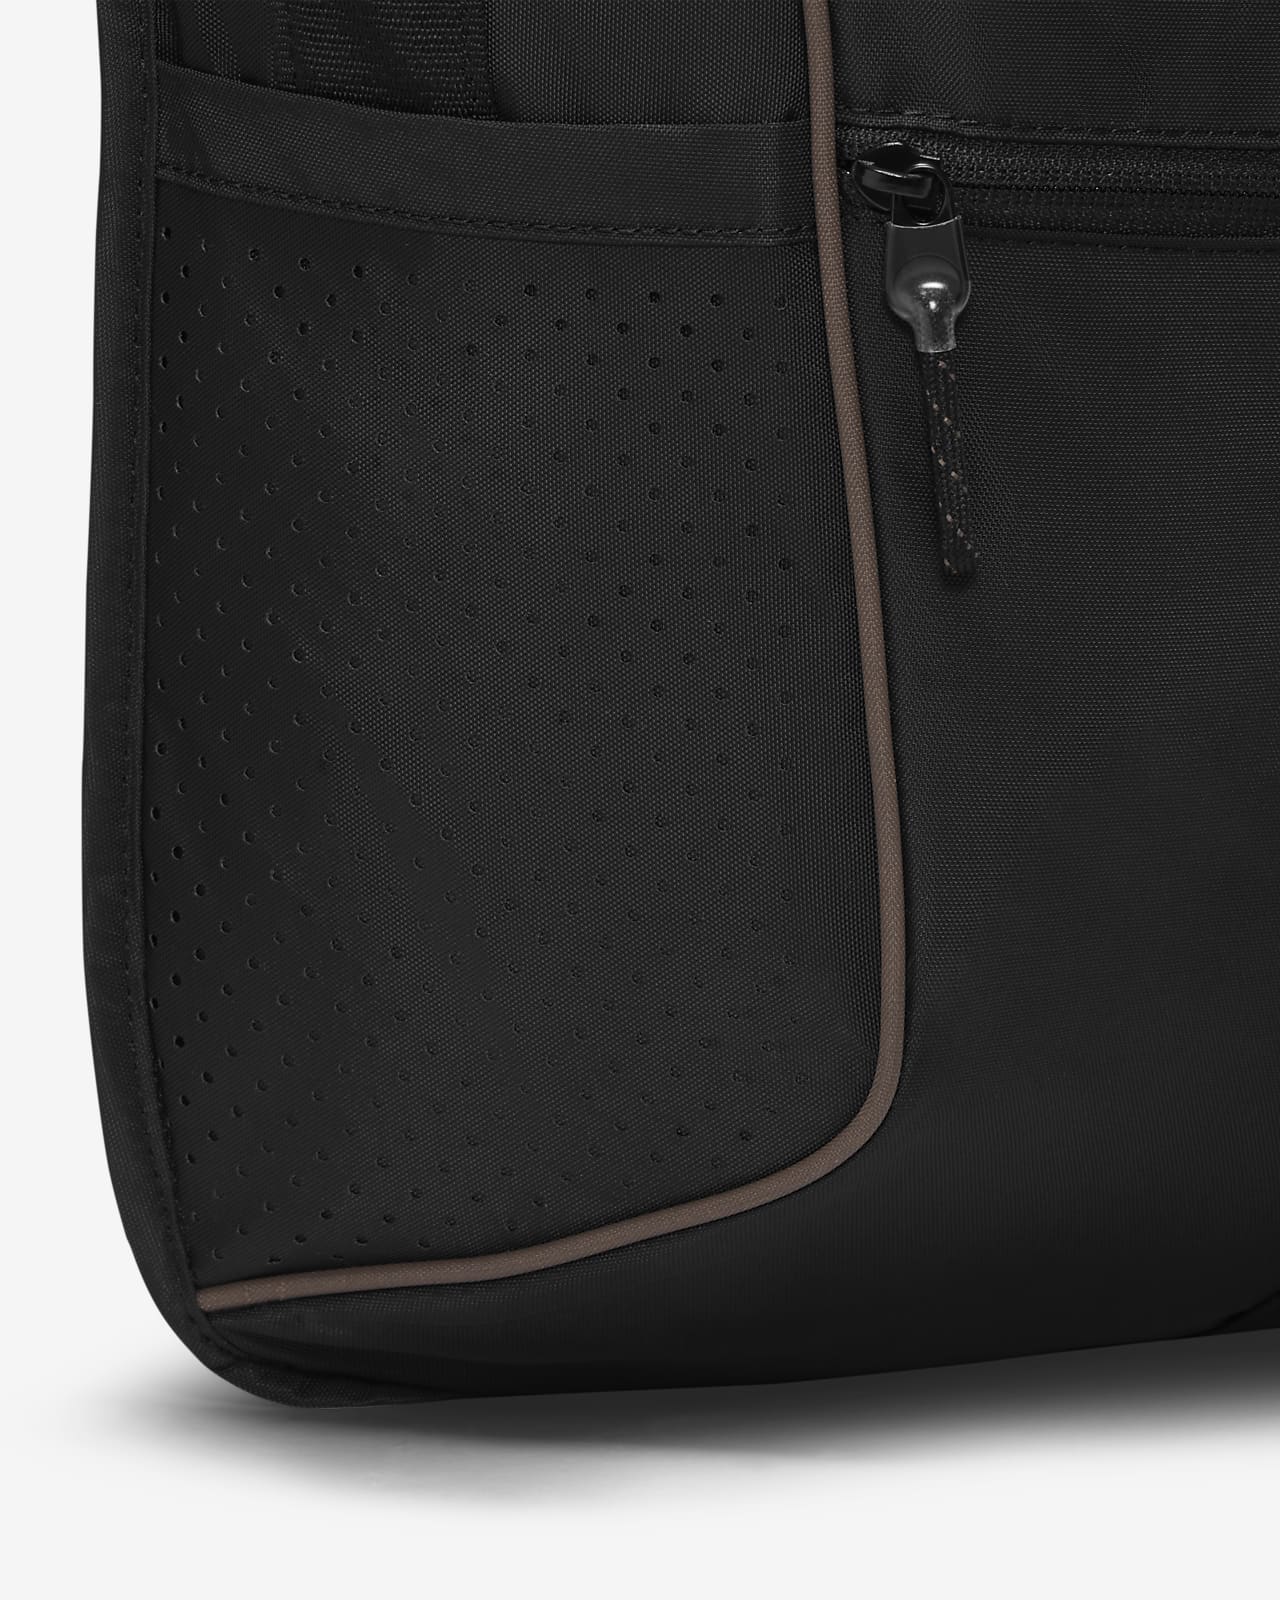 Nike Laptop Sleeve Tote Bags | Mercari